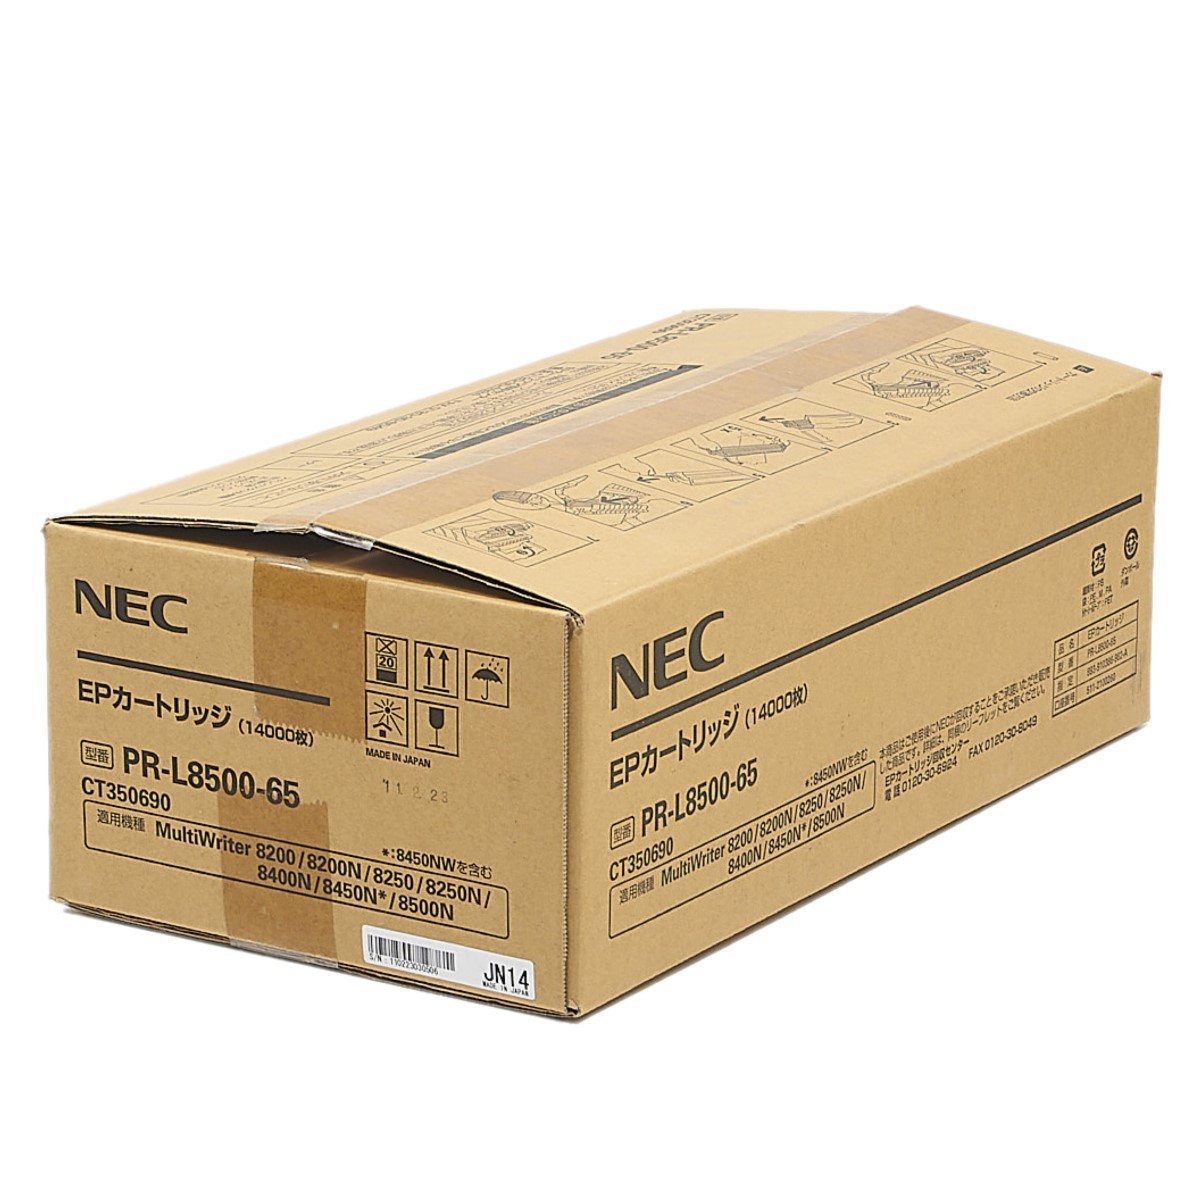 NEC PR-L8500-65 EPカートリッジ 純正箱開封品 適合機種 MultiWriter8500N/8450NW/8450N/8250N/8250/8400N/8200N/8200(14000枚)_画像1